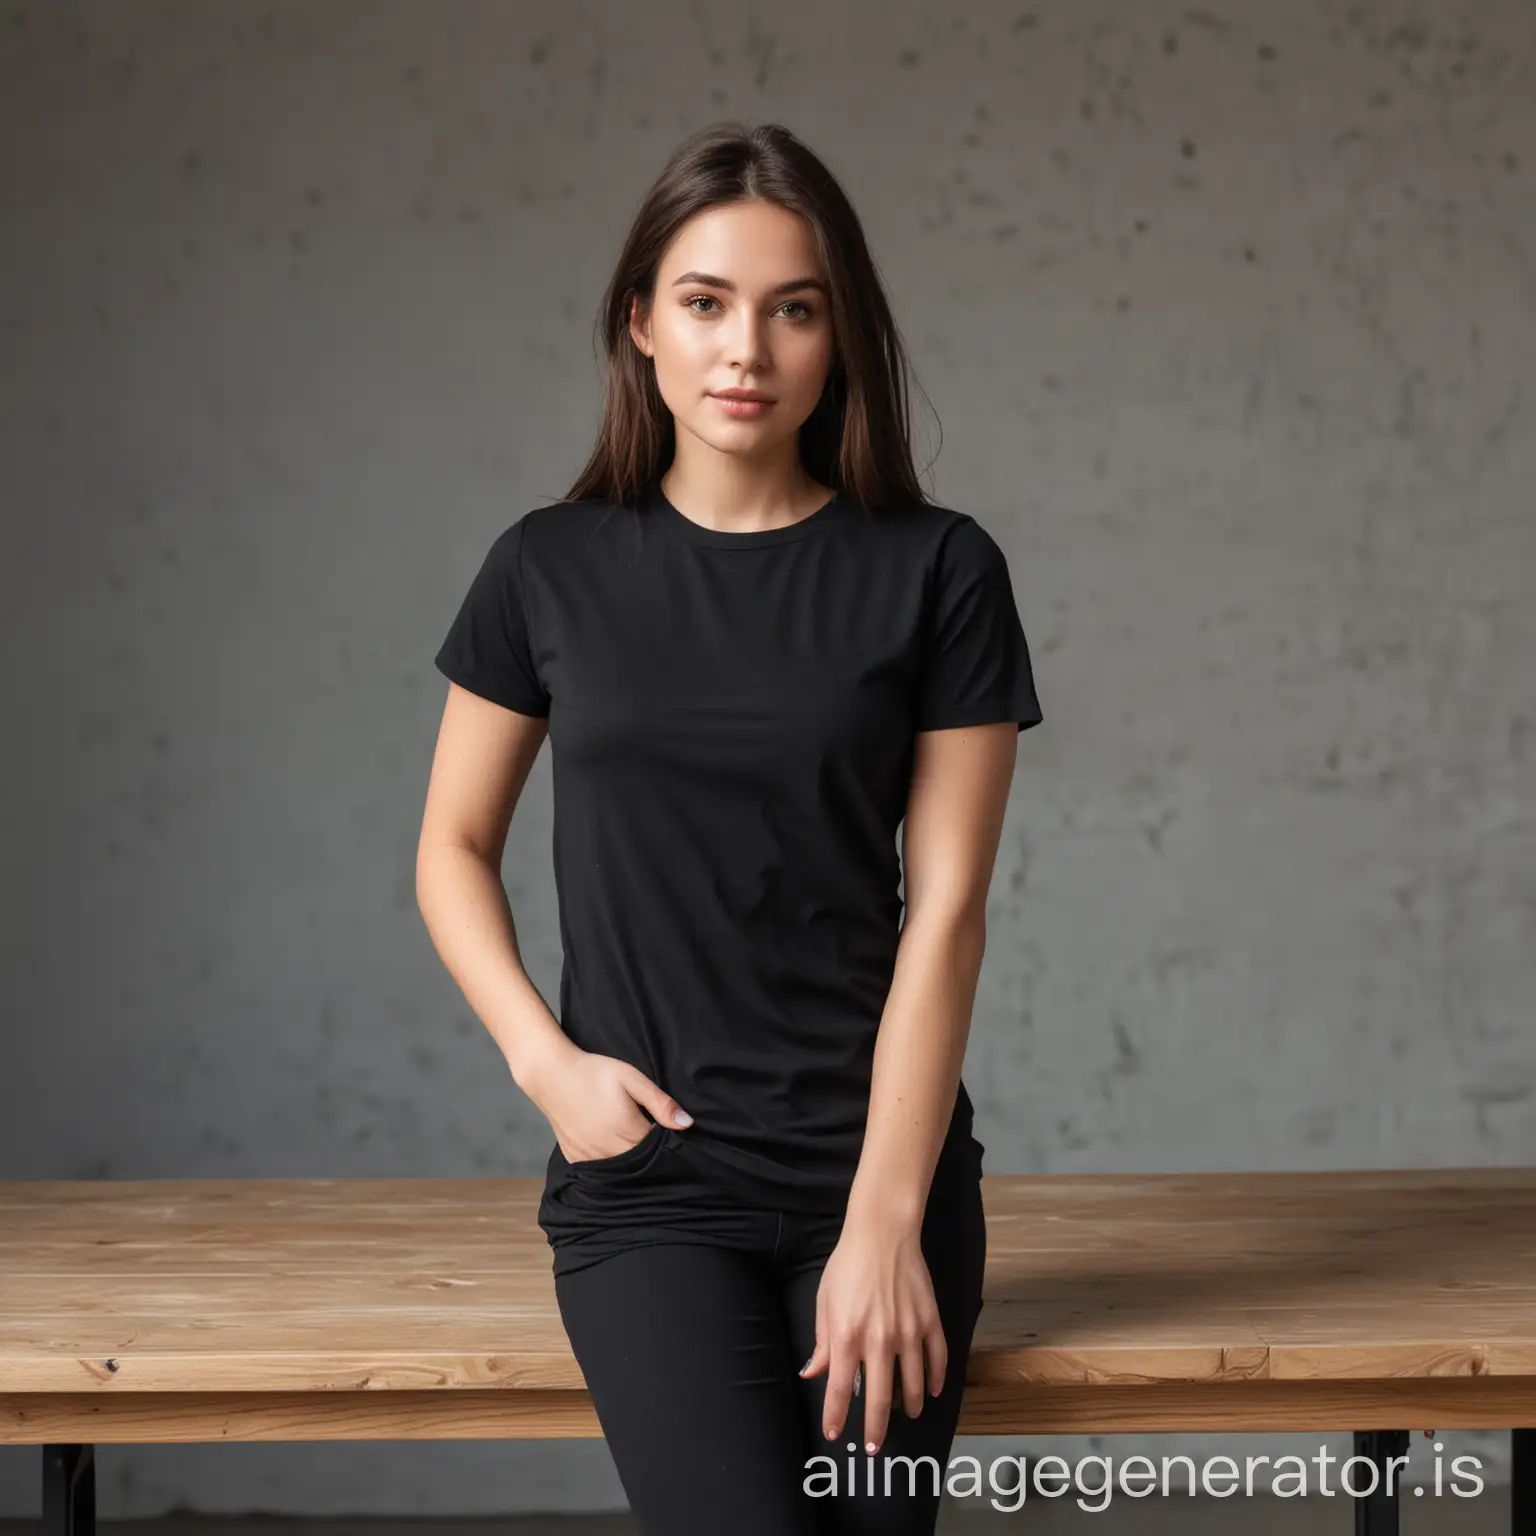 Female model wearing black basic tee standing near table